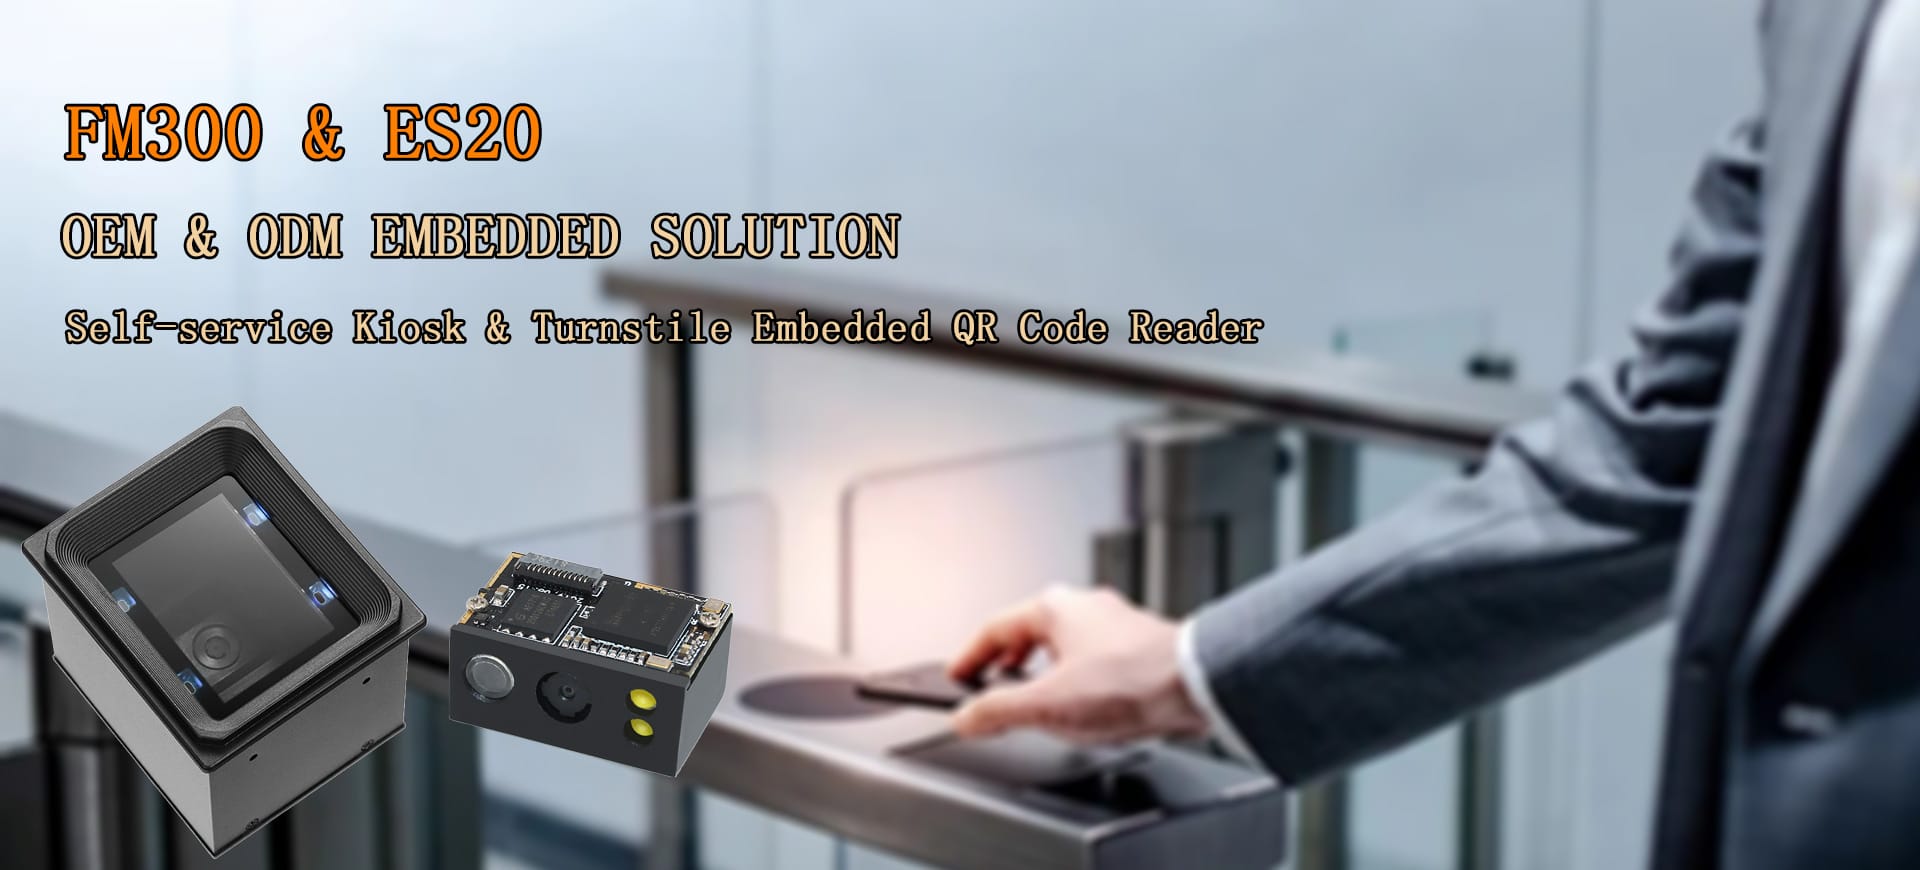 FM300 バーコードスキャナー